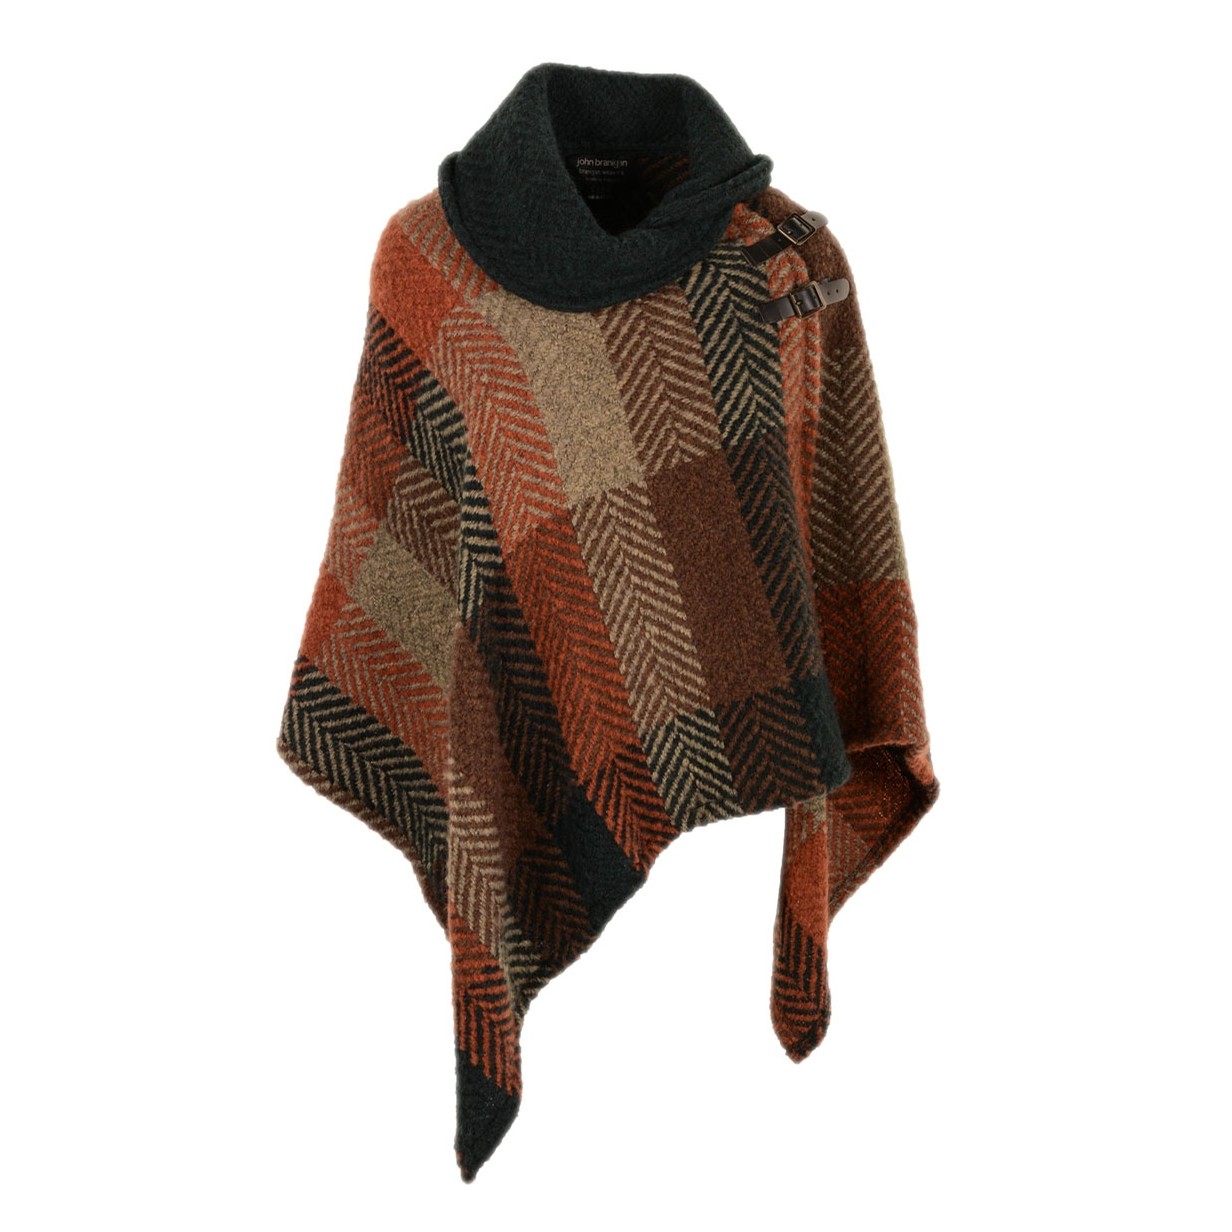 Branigan Weavers Irish Shawl Collar Cape (Autumn Leaves) Clothing Capes ...